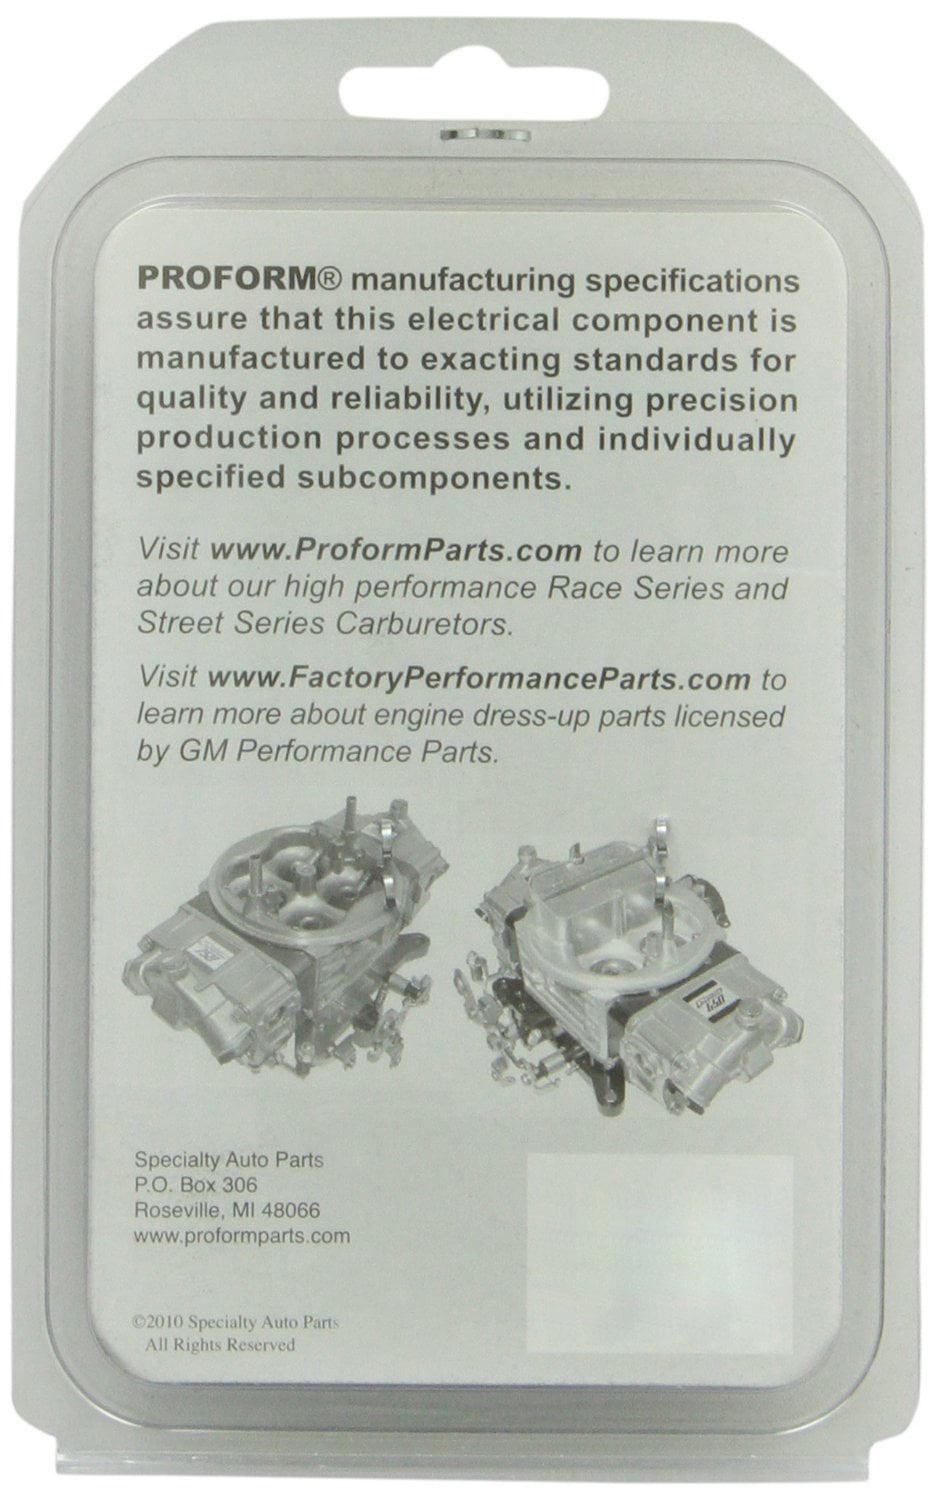 Proform Parts 66944C High Performance Ignition Modules